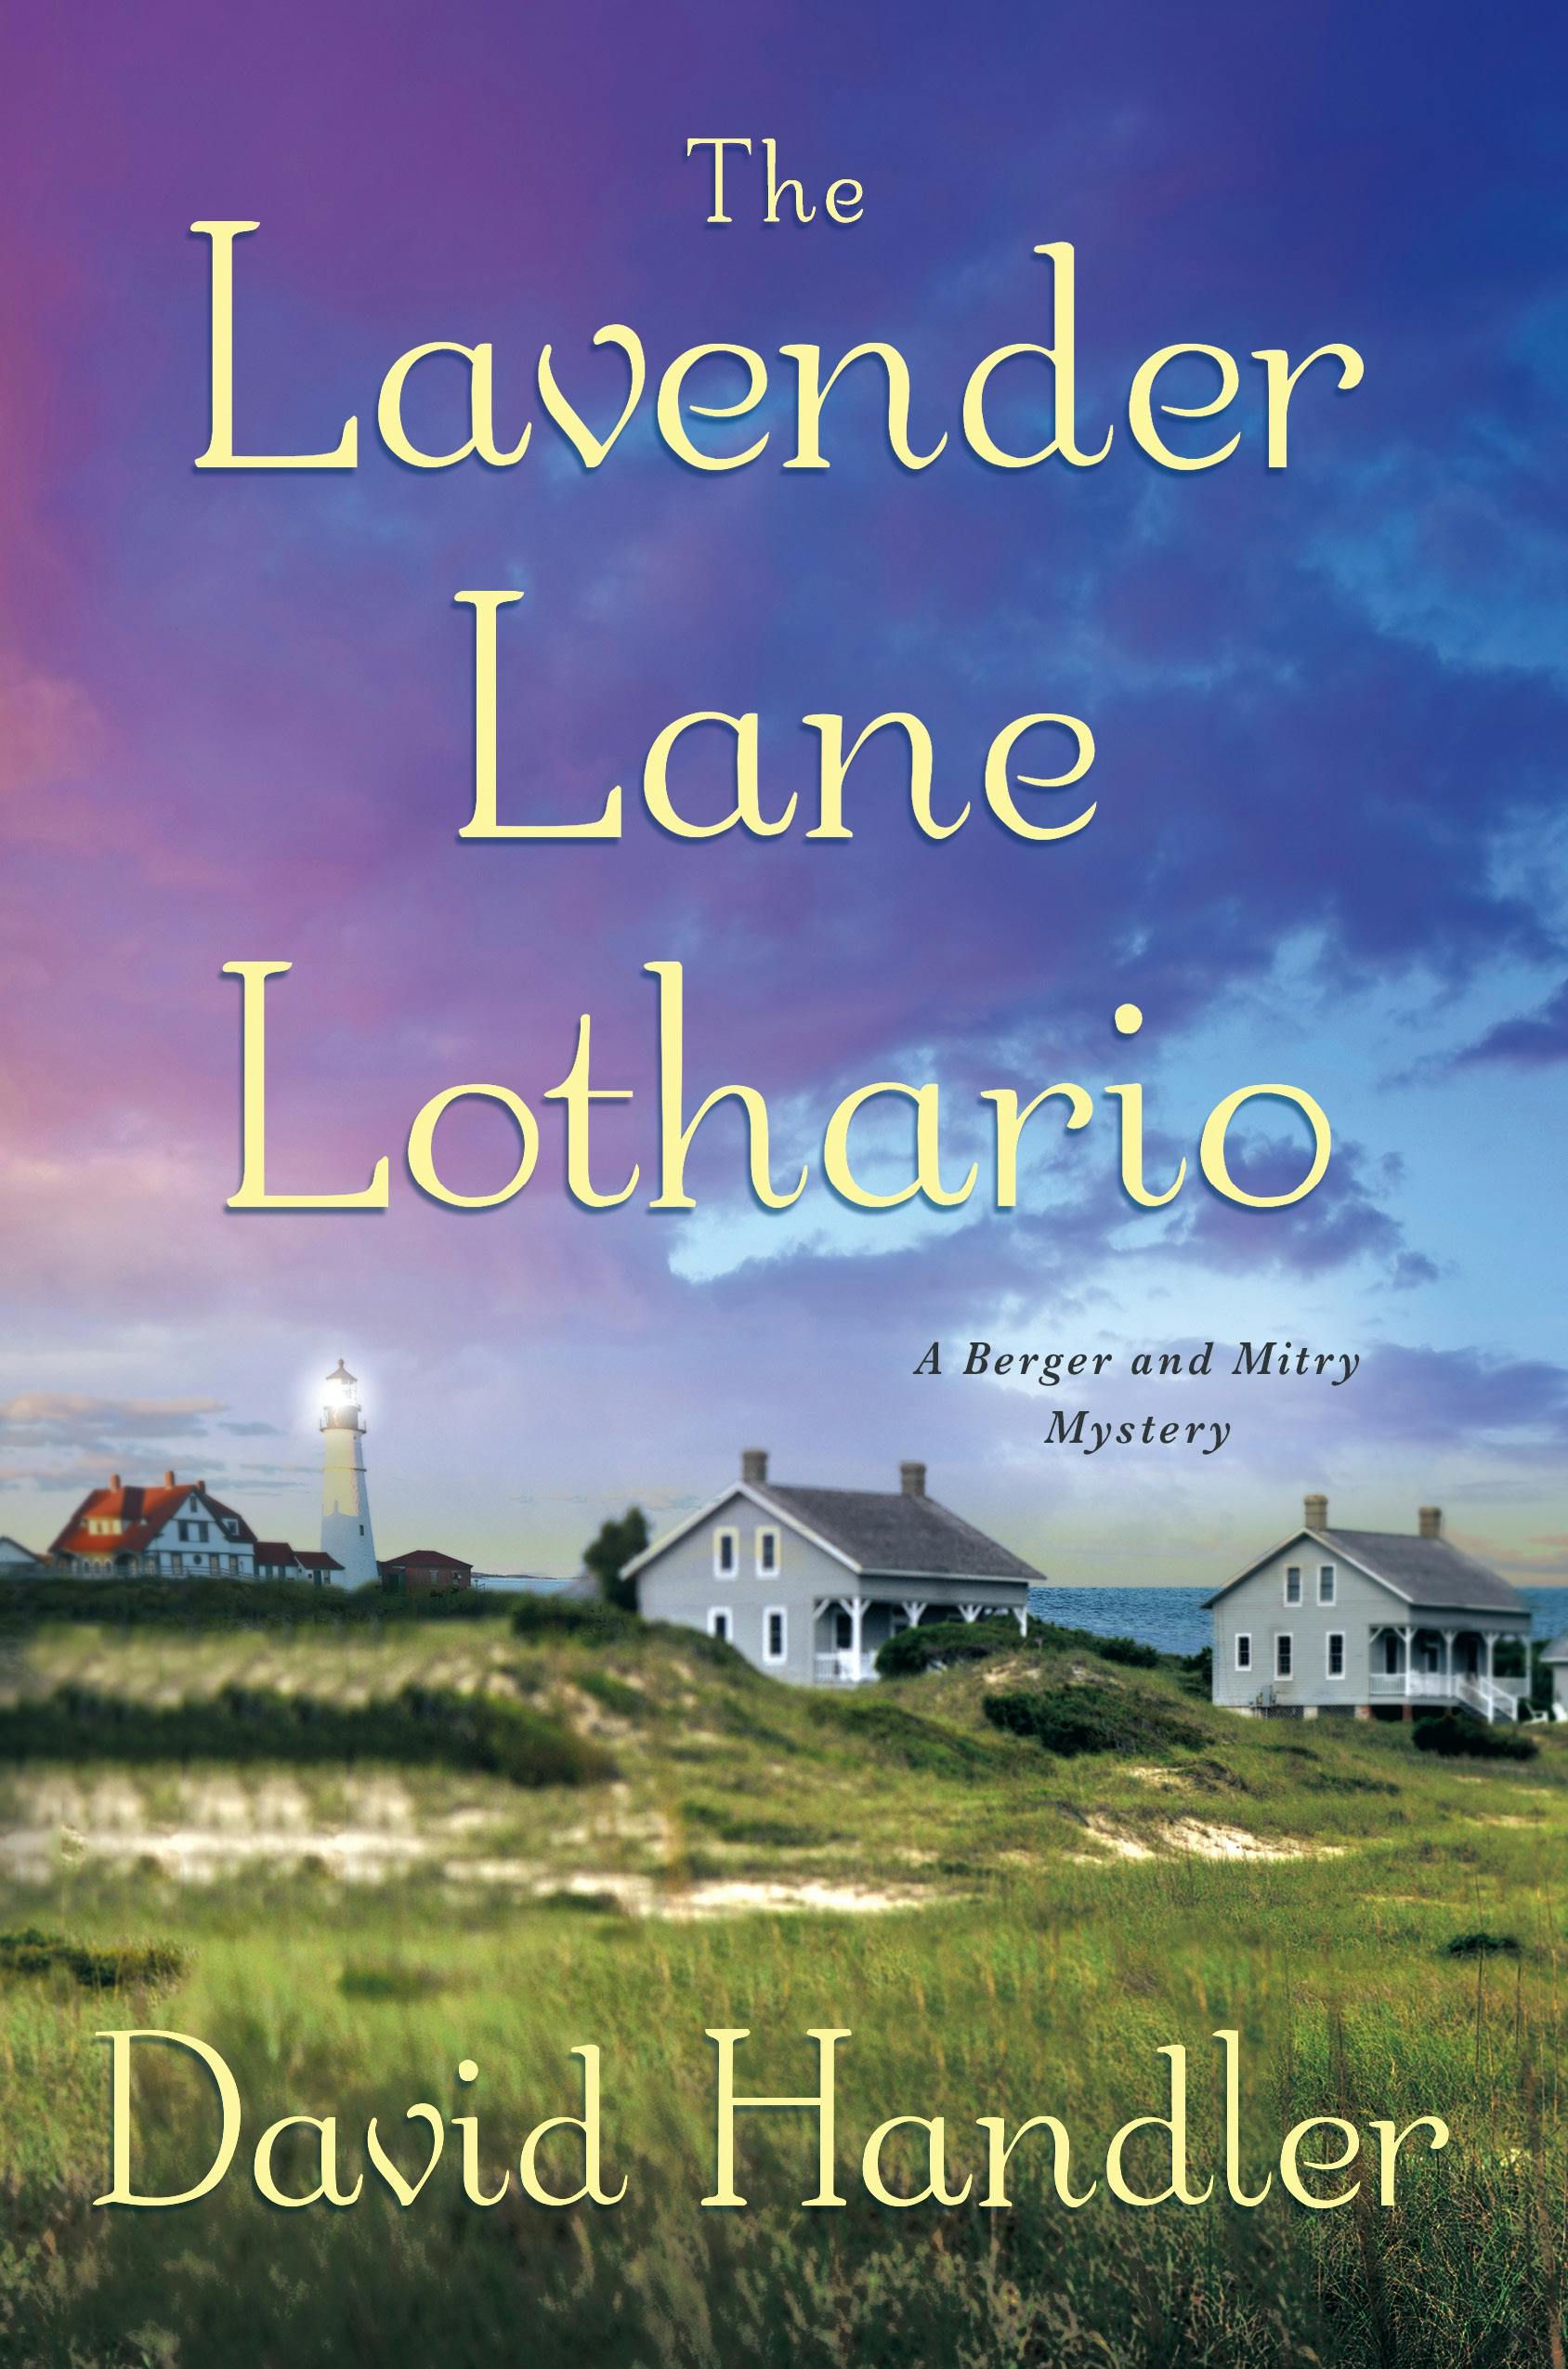 The Lavender Lane Lothario